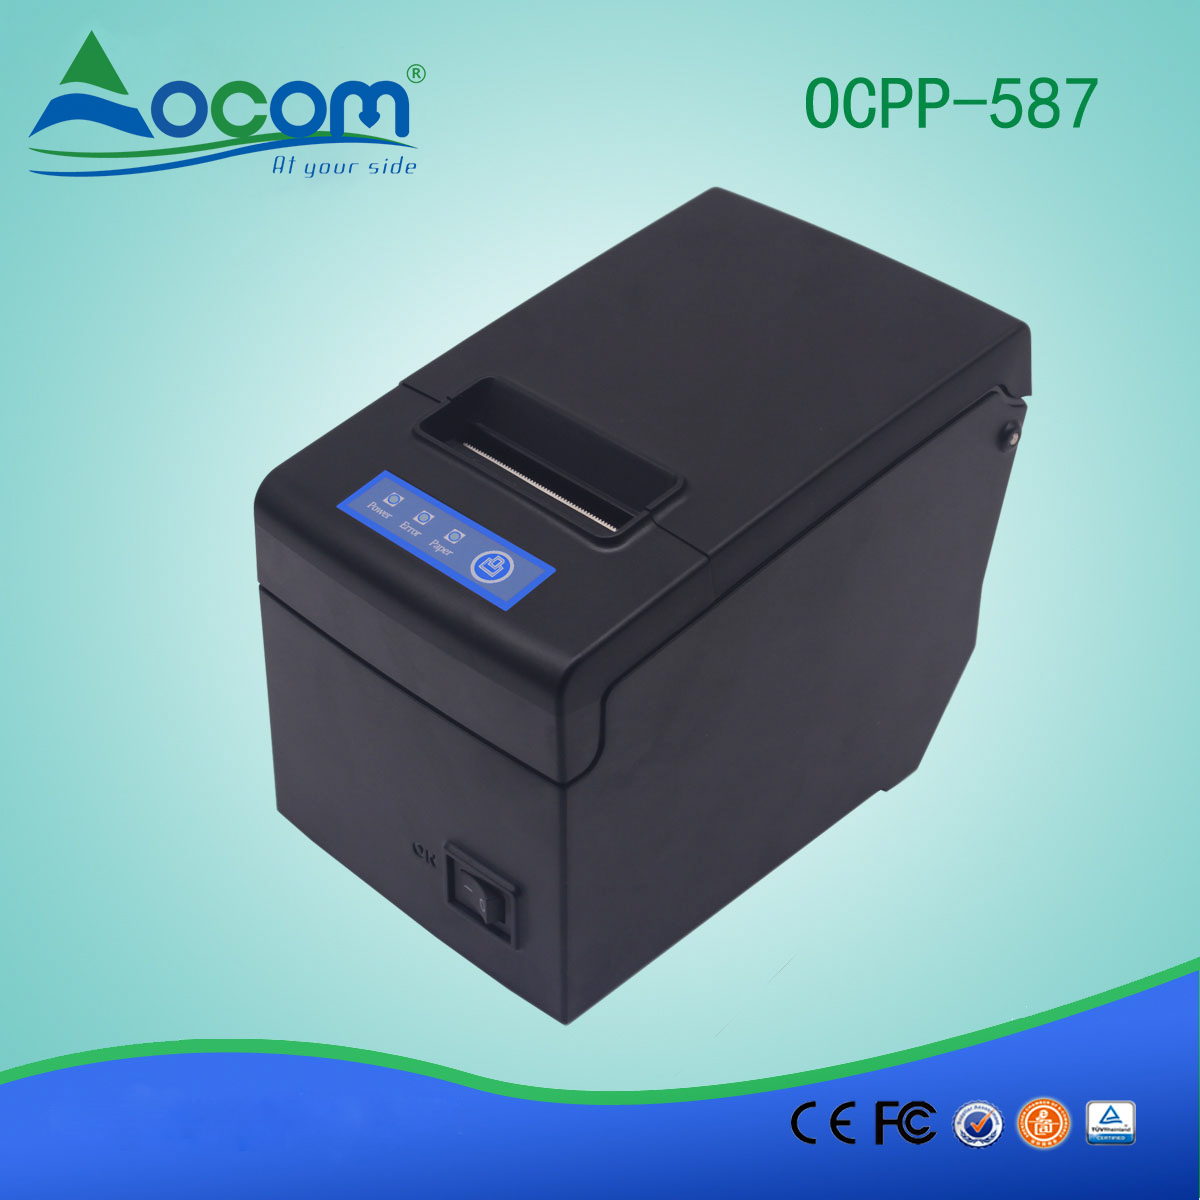 58mm εκτυπωτής θερμικής απόδοσης OCPP-587-R RS232 / COM / σειριακή θύρα